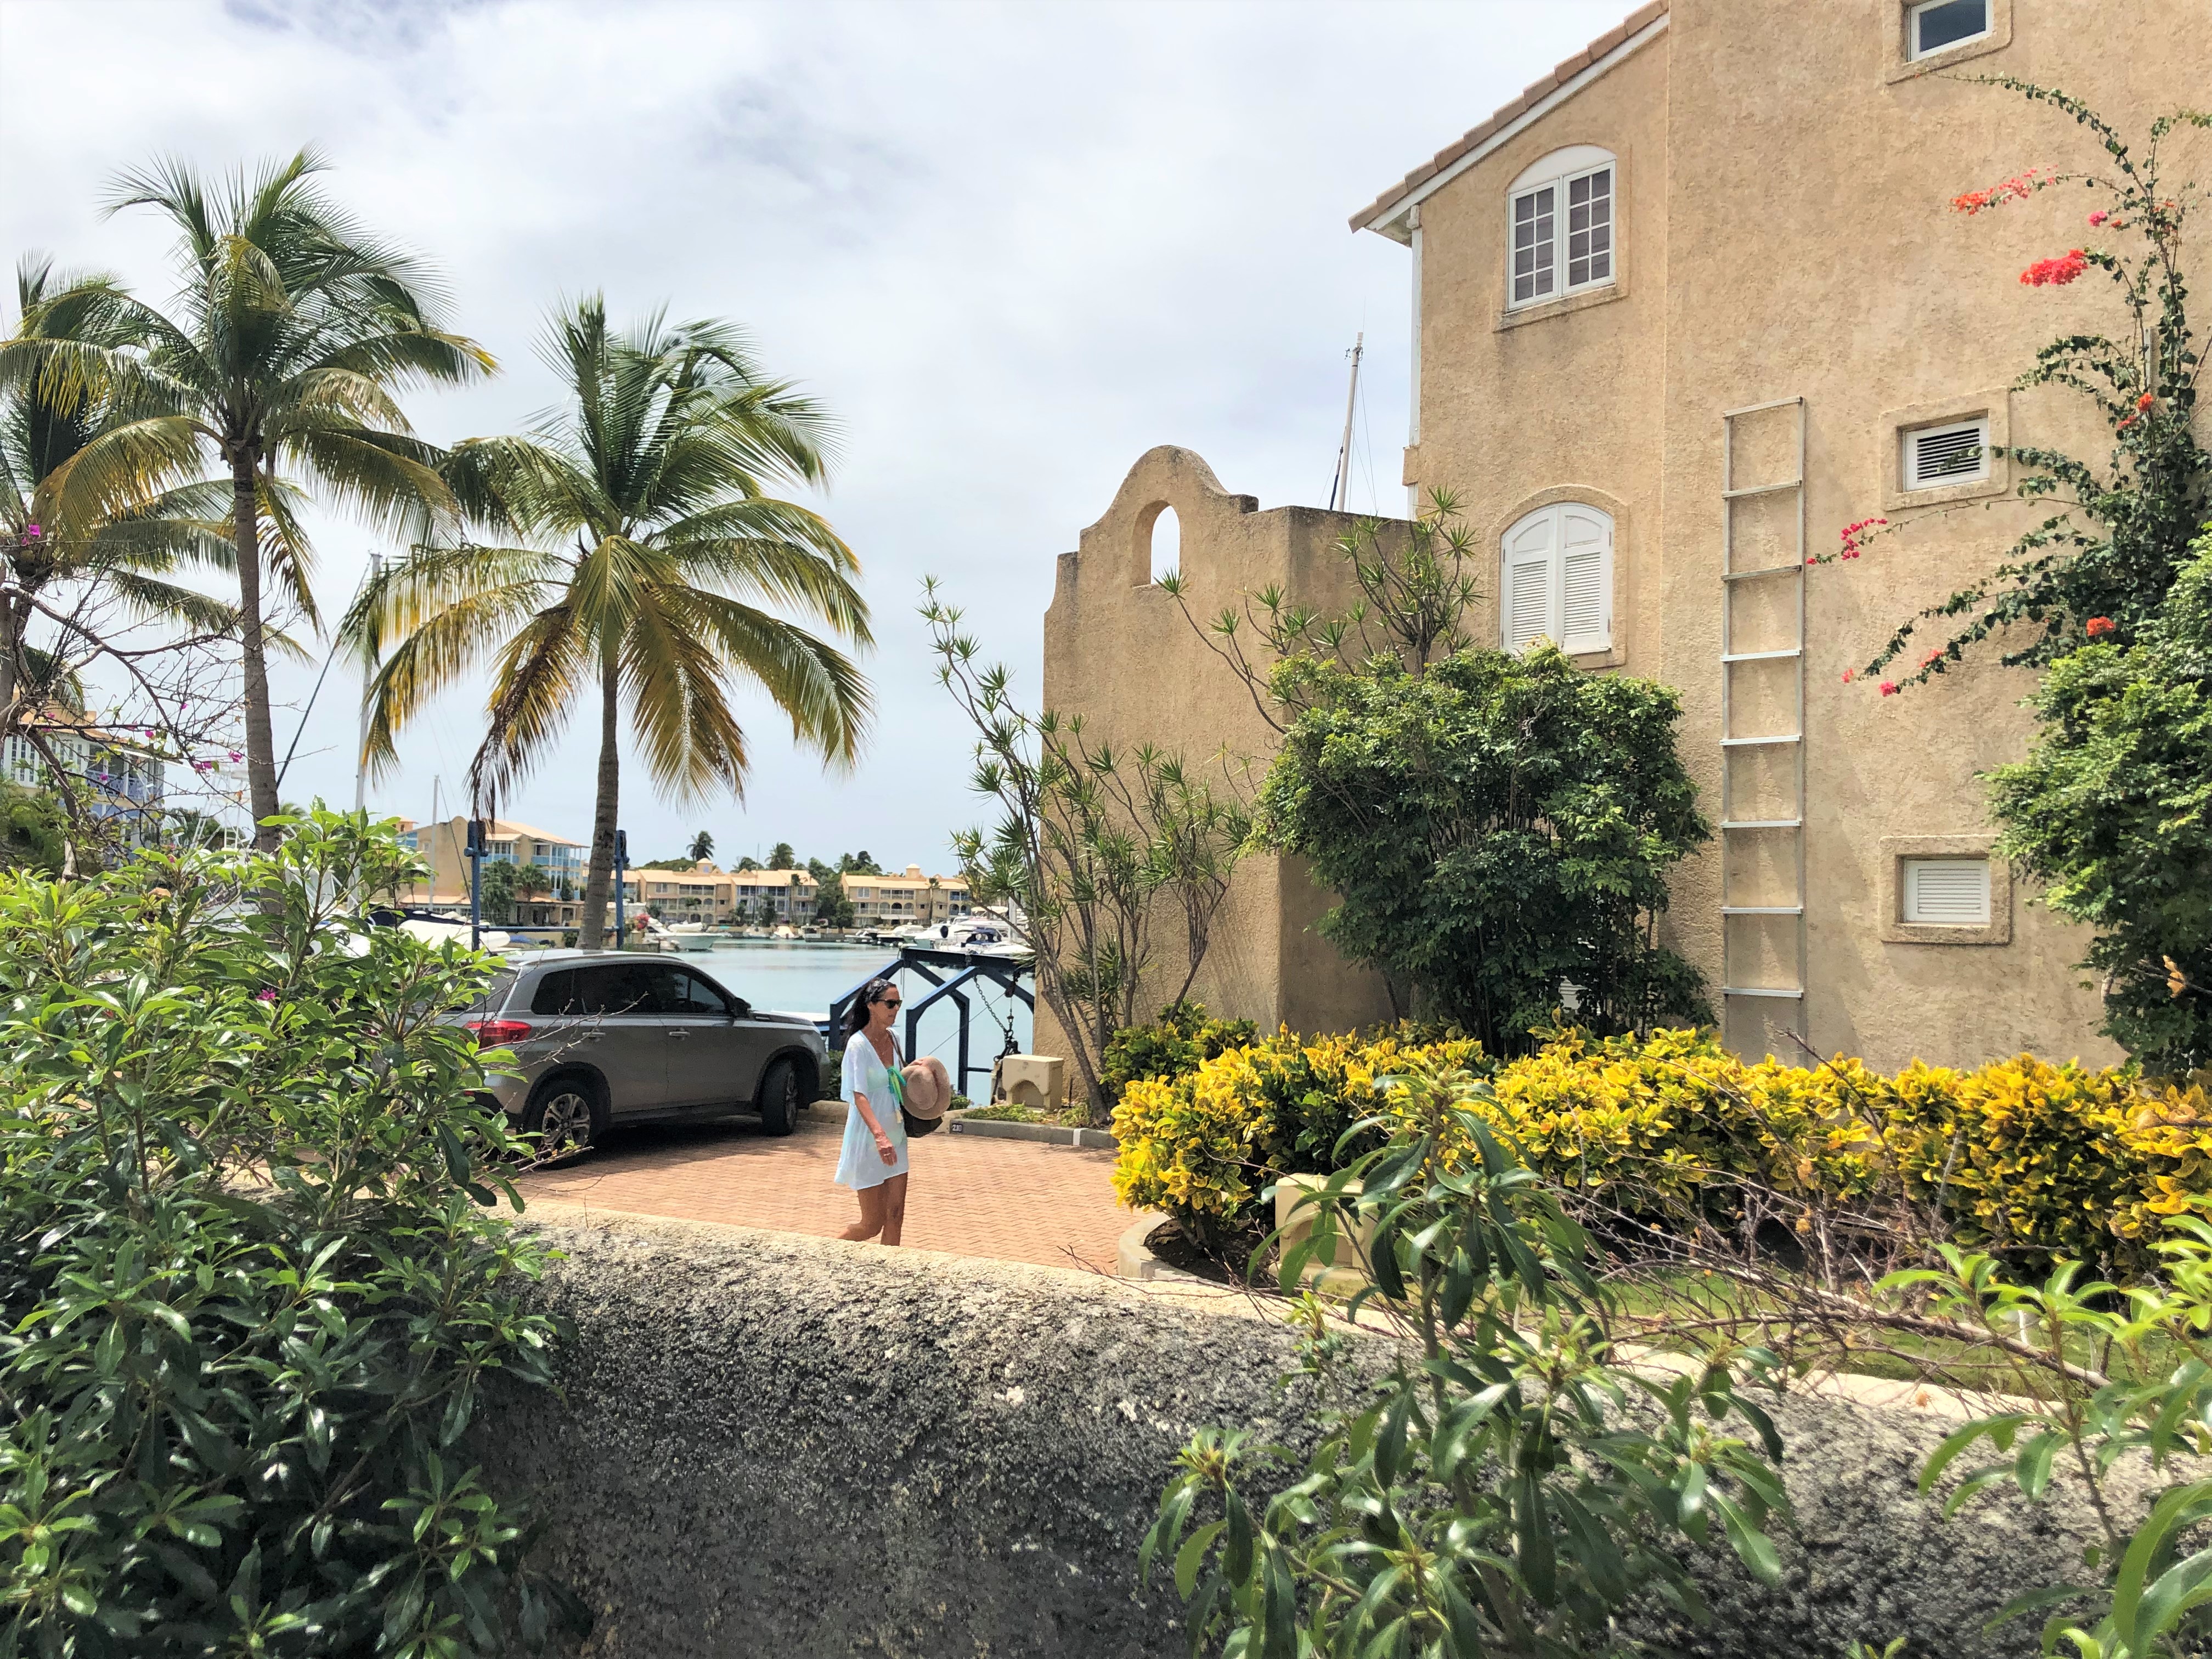 Port St Charles Marina Resort, Heywoods, St Peter, Barbados